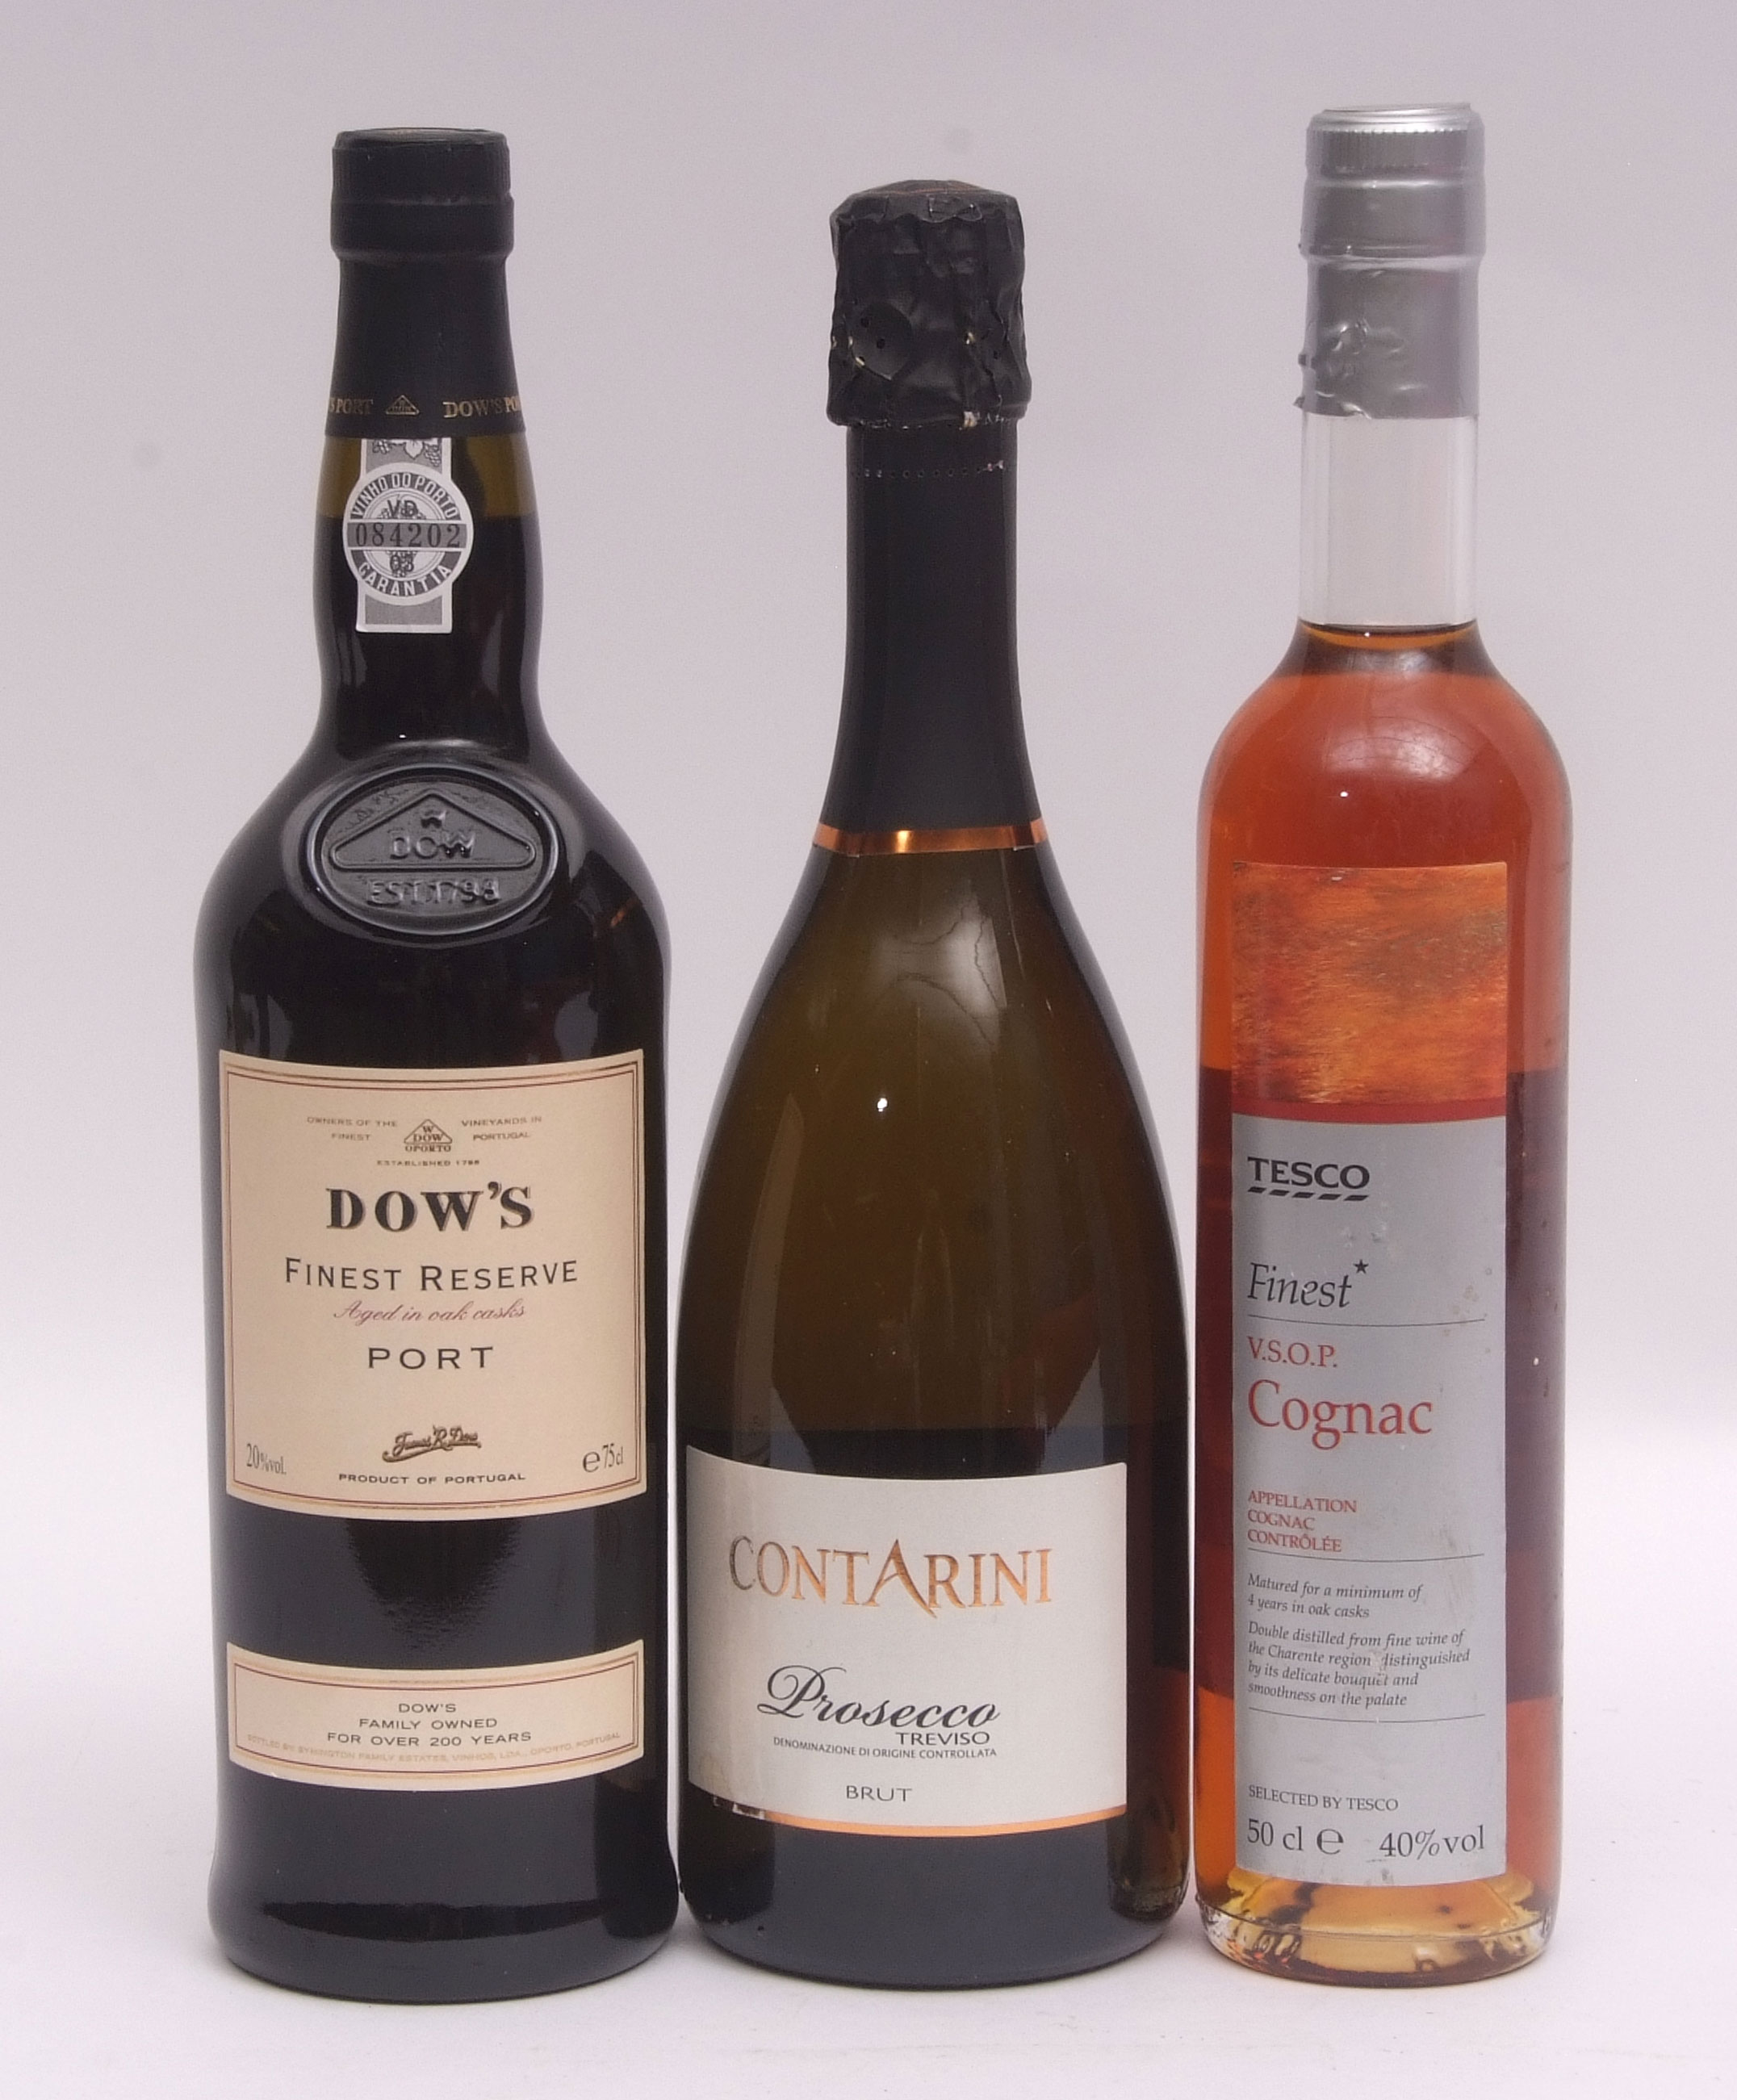 Dow's Finest Reserve Port, Tesco Finest VSOP Cognac 50cl, Contarini Prosecco, 1 bottle of each (3)